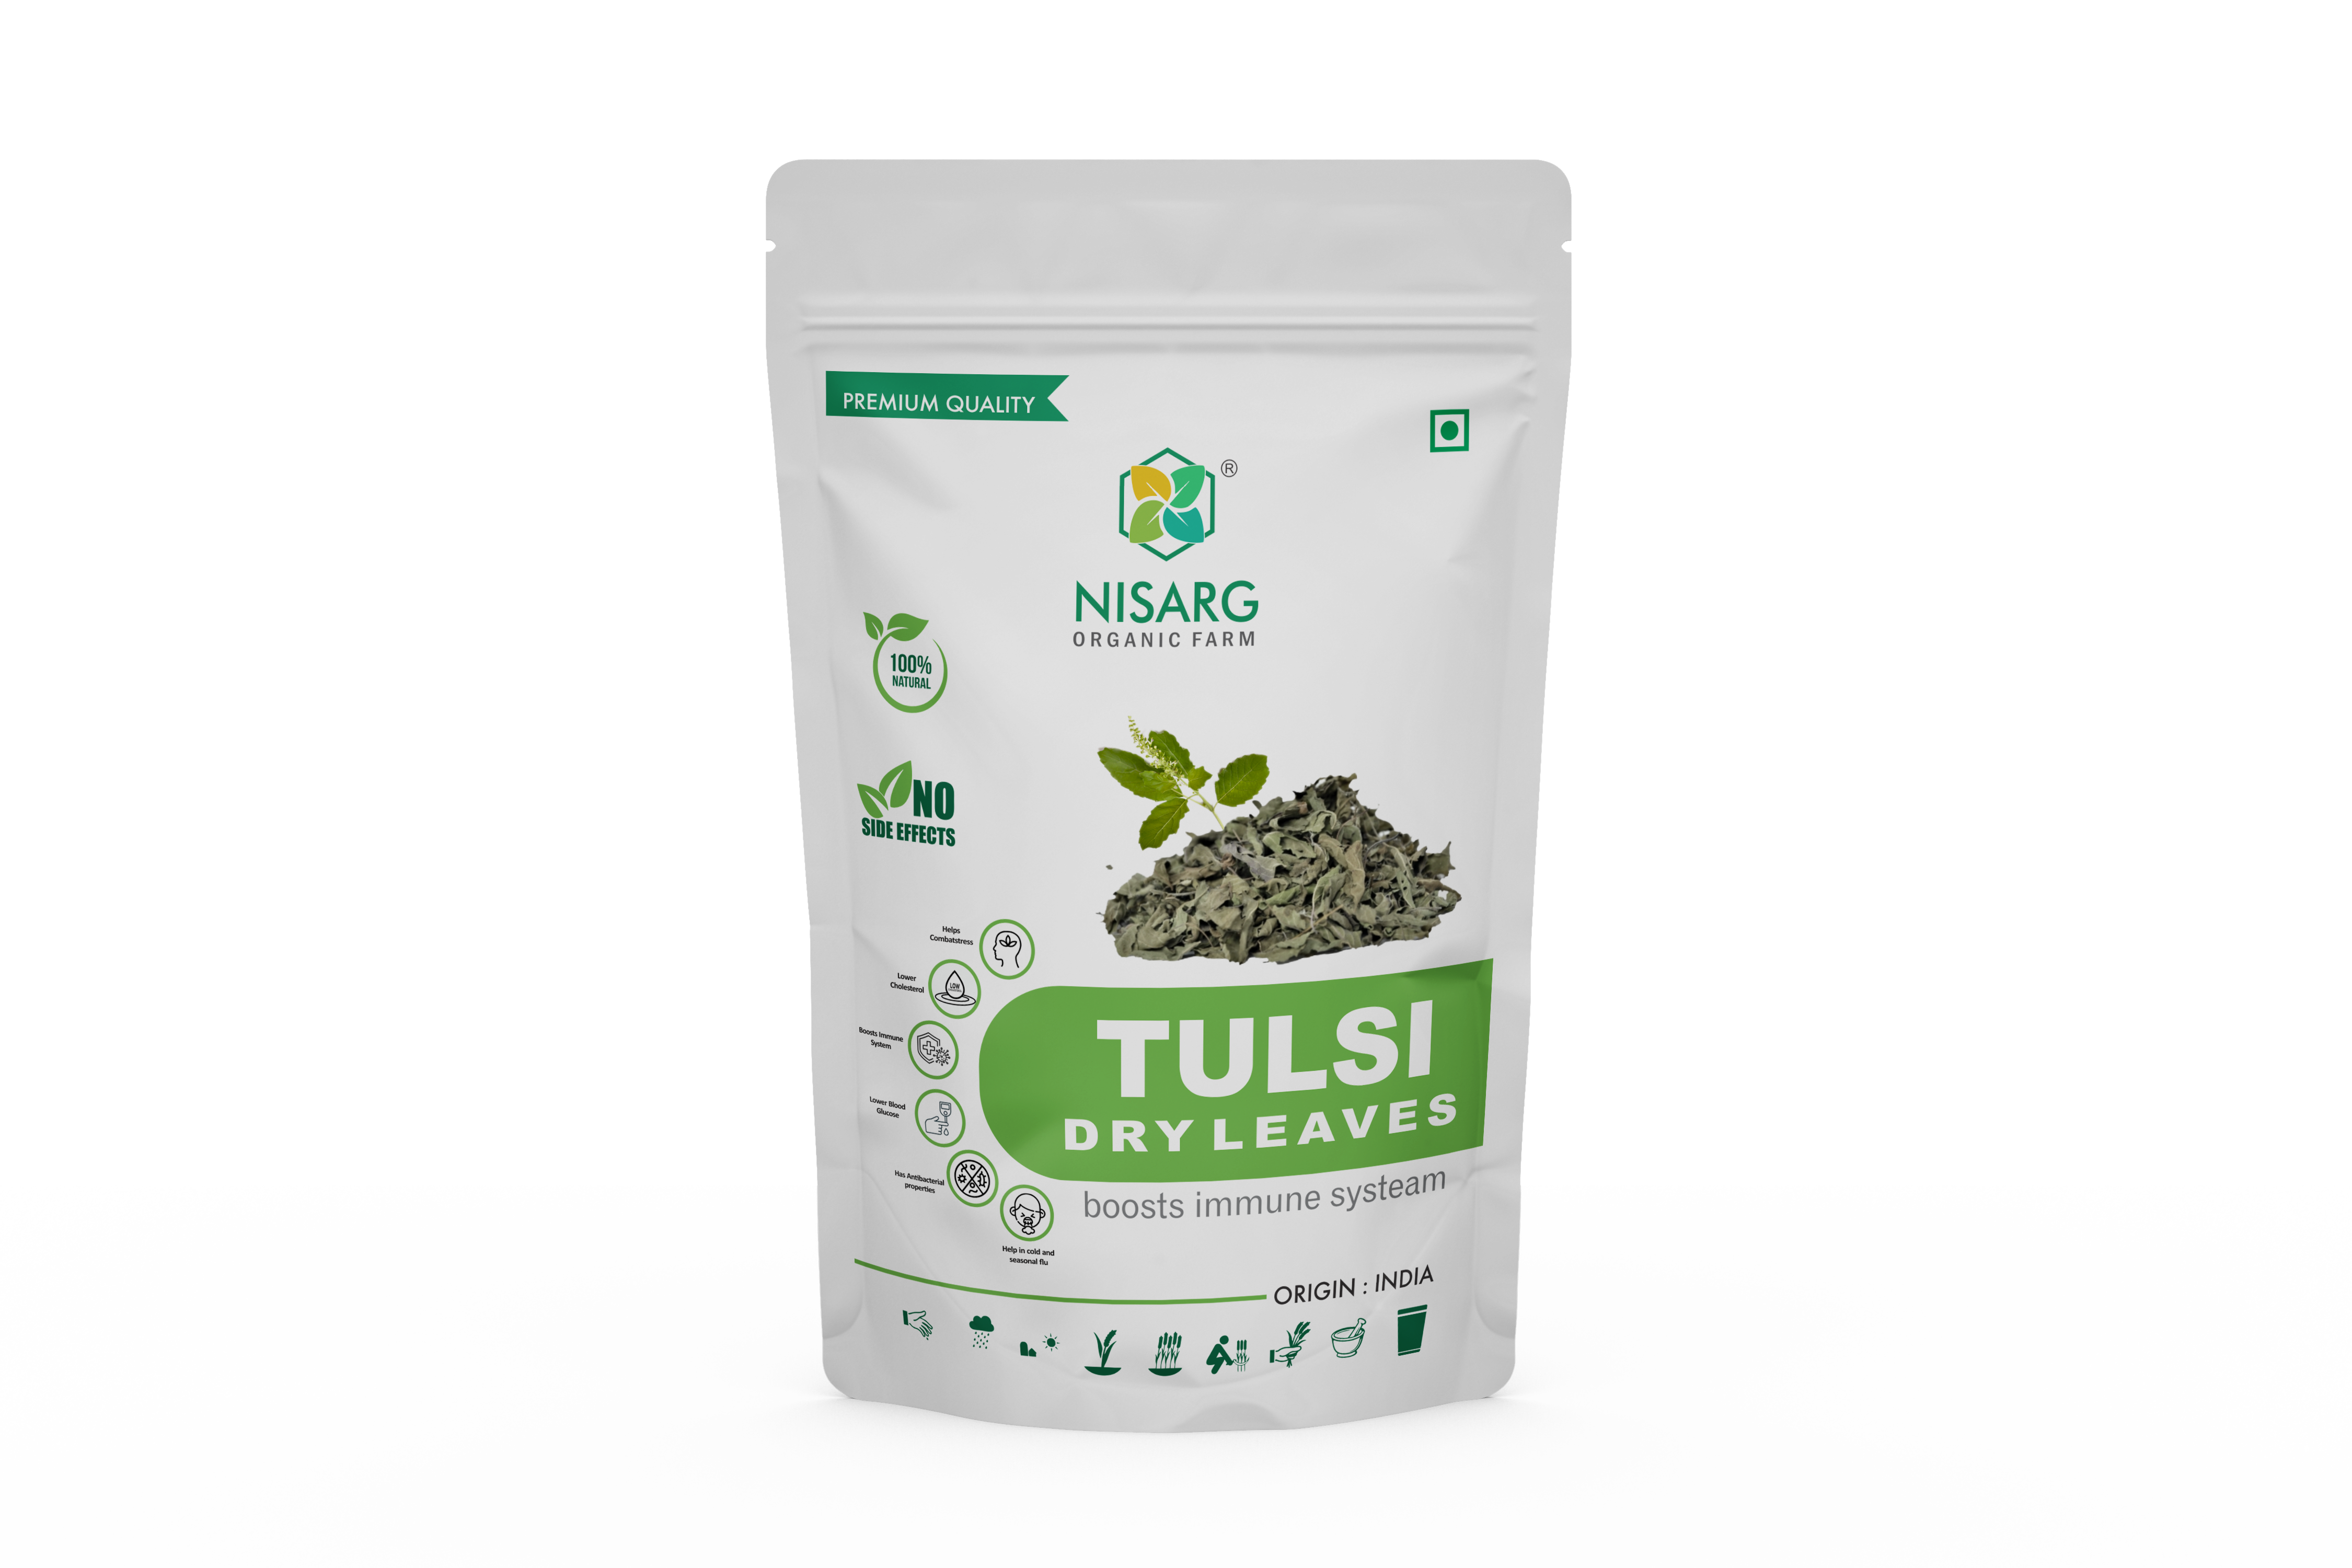 Product: Nisarg Tulsi Dry Leaves